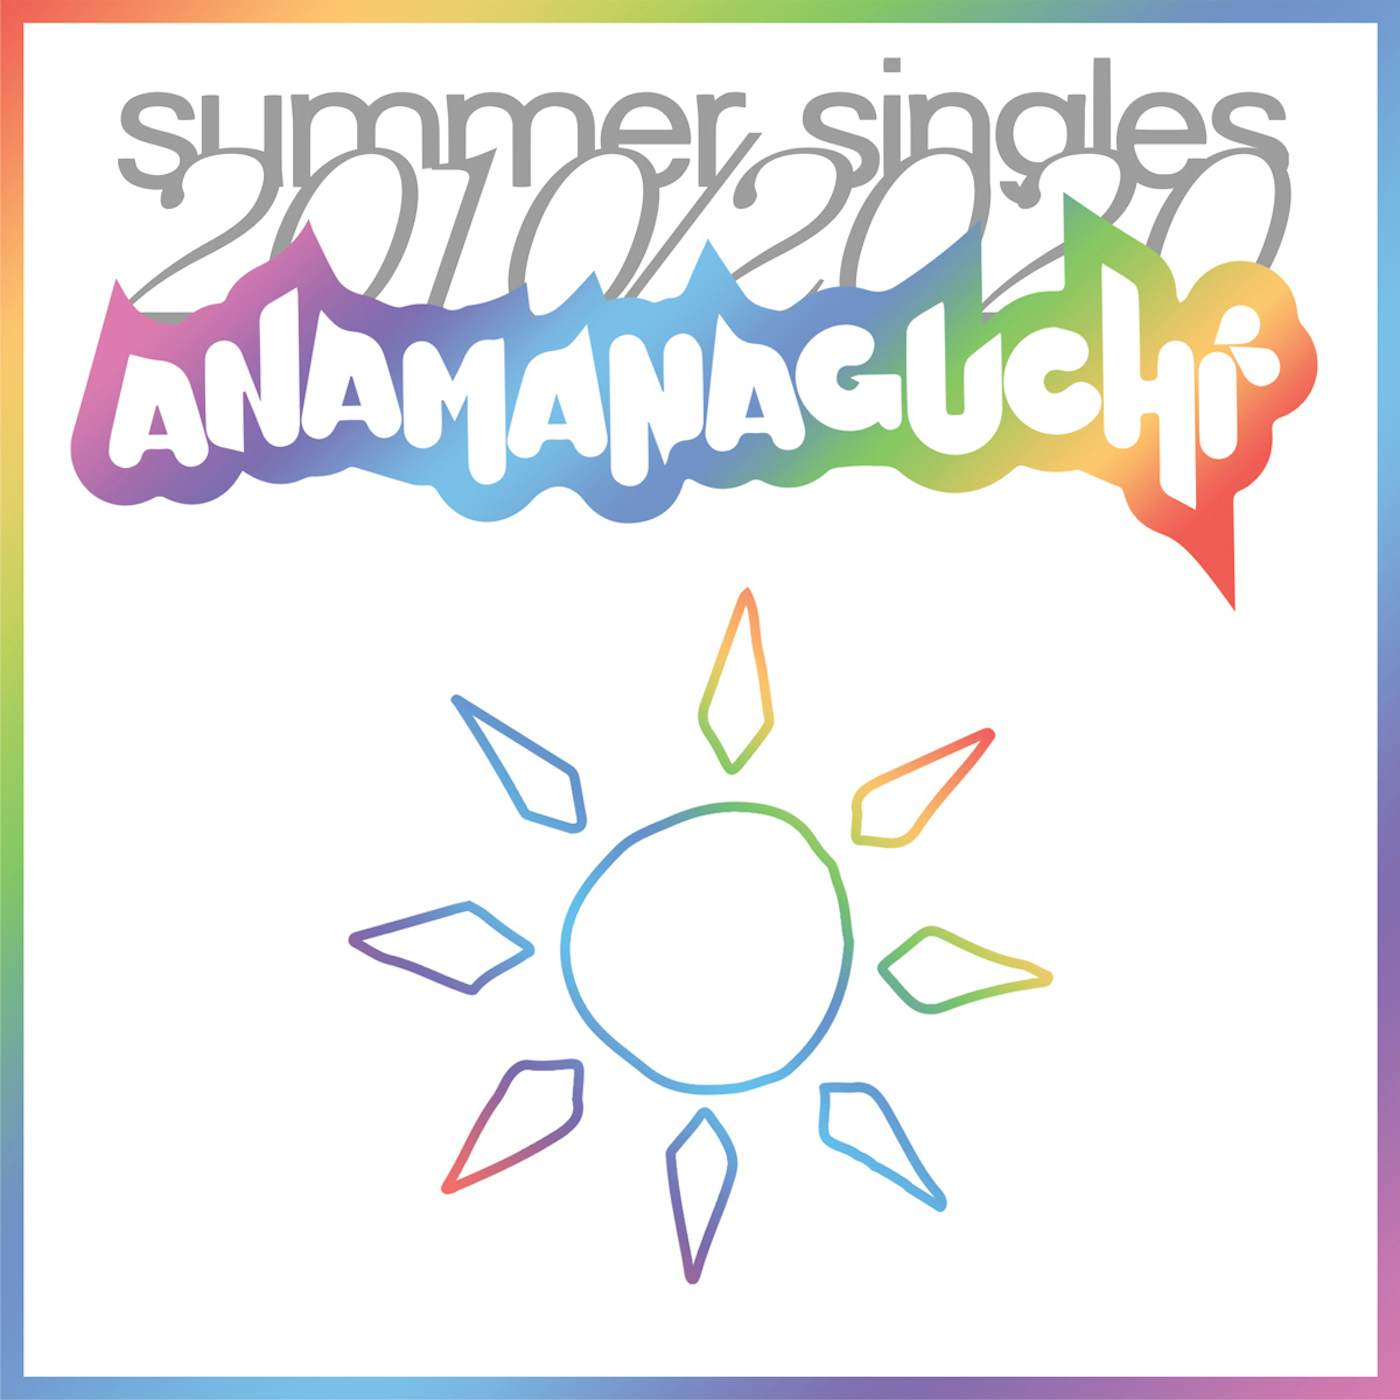 Anamanaguchi Summer Singles 2010/2020